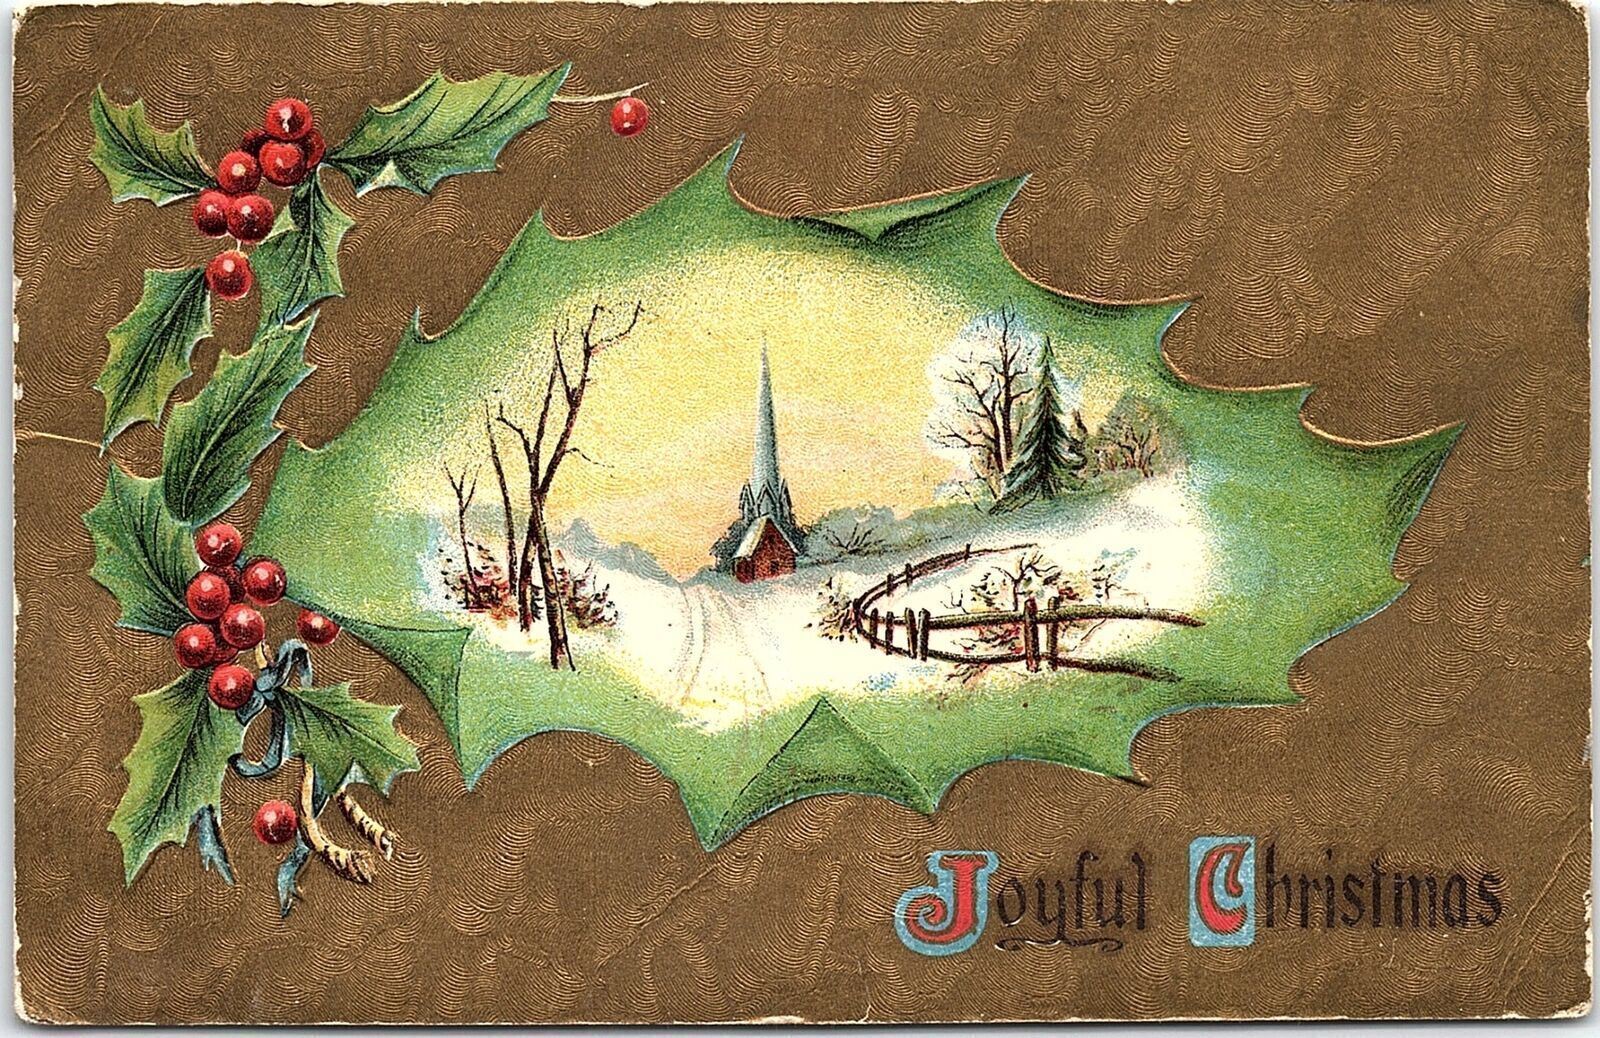 1909 JOYFUL CHRISTMAS GILDED SNOW SCENE ABINGDON ILLINOIS POSTCARD 41-188